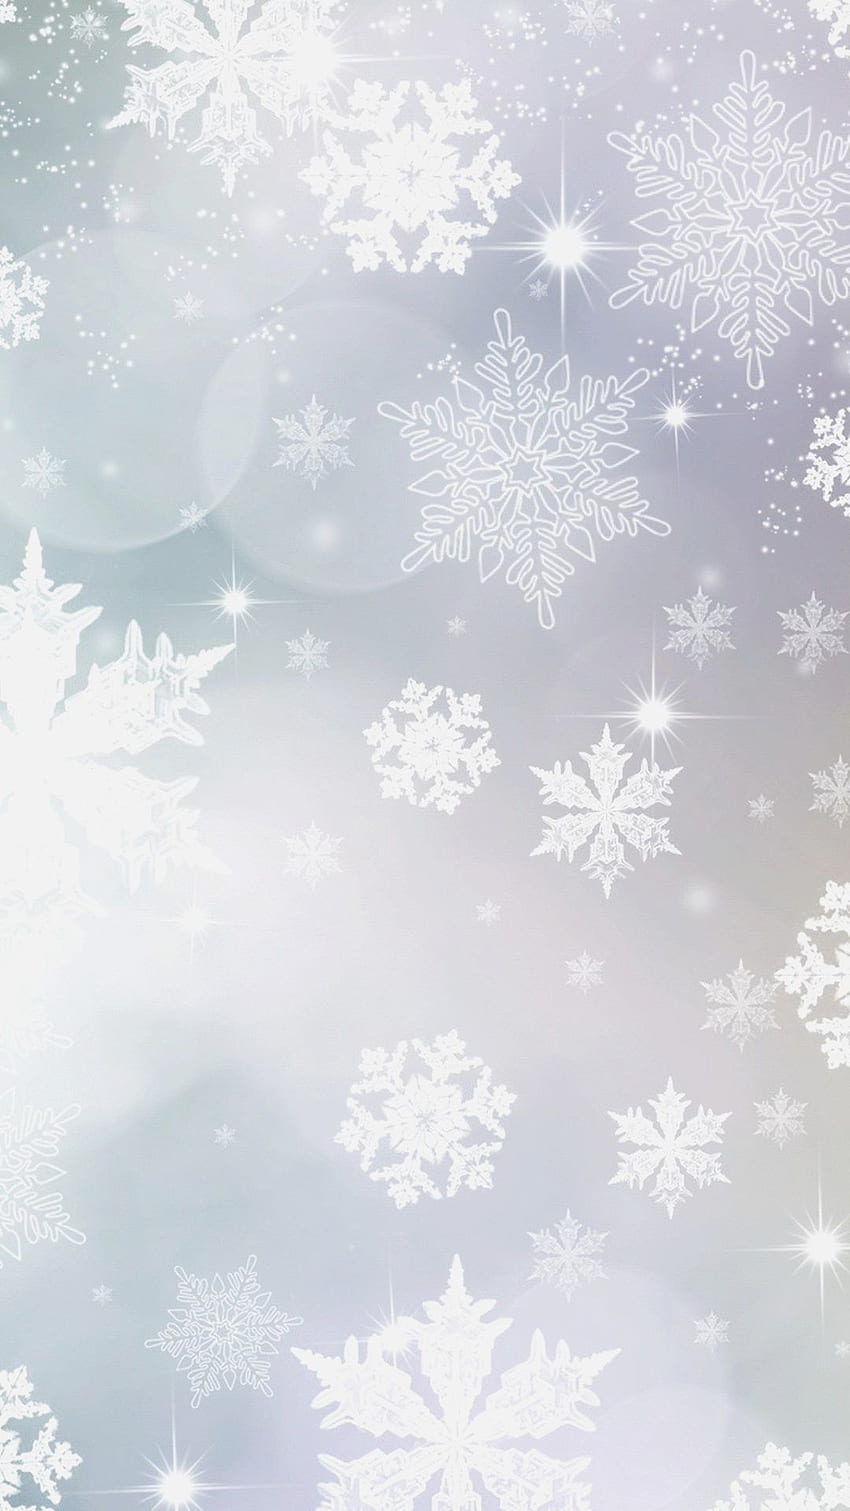 Free download snowflake wallpaper iphone 5 640x1136 for your Desktop  Mobile  Tablet  Explore 73 Snowflake Wallpaper  Snowflake Desktop  Background Snowflake Background Snowflake Desktop Wallpaper